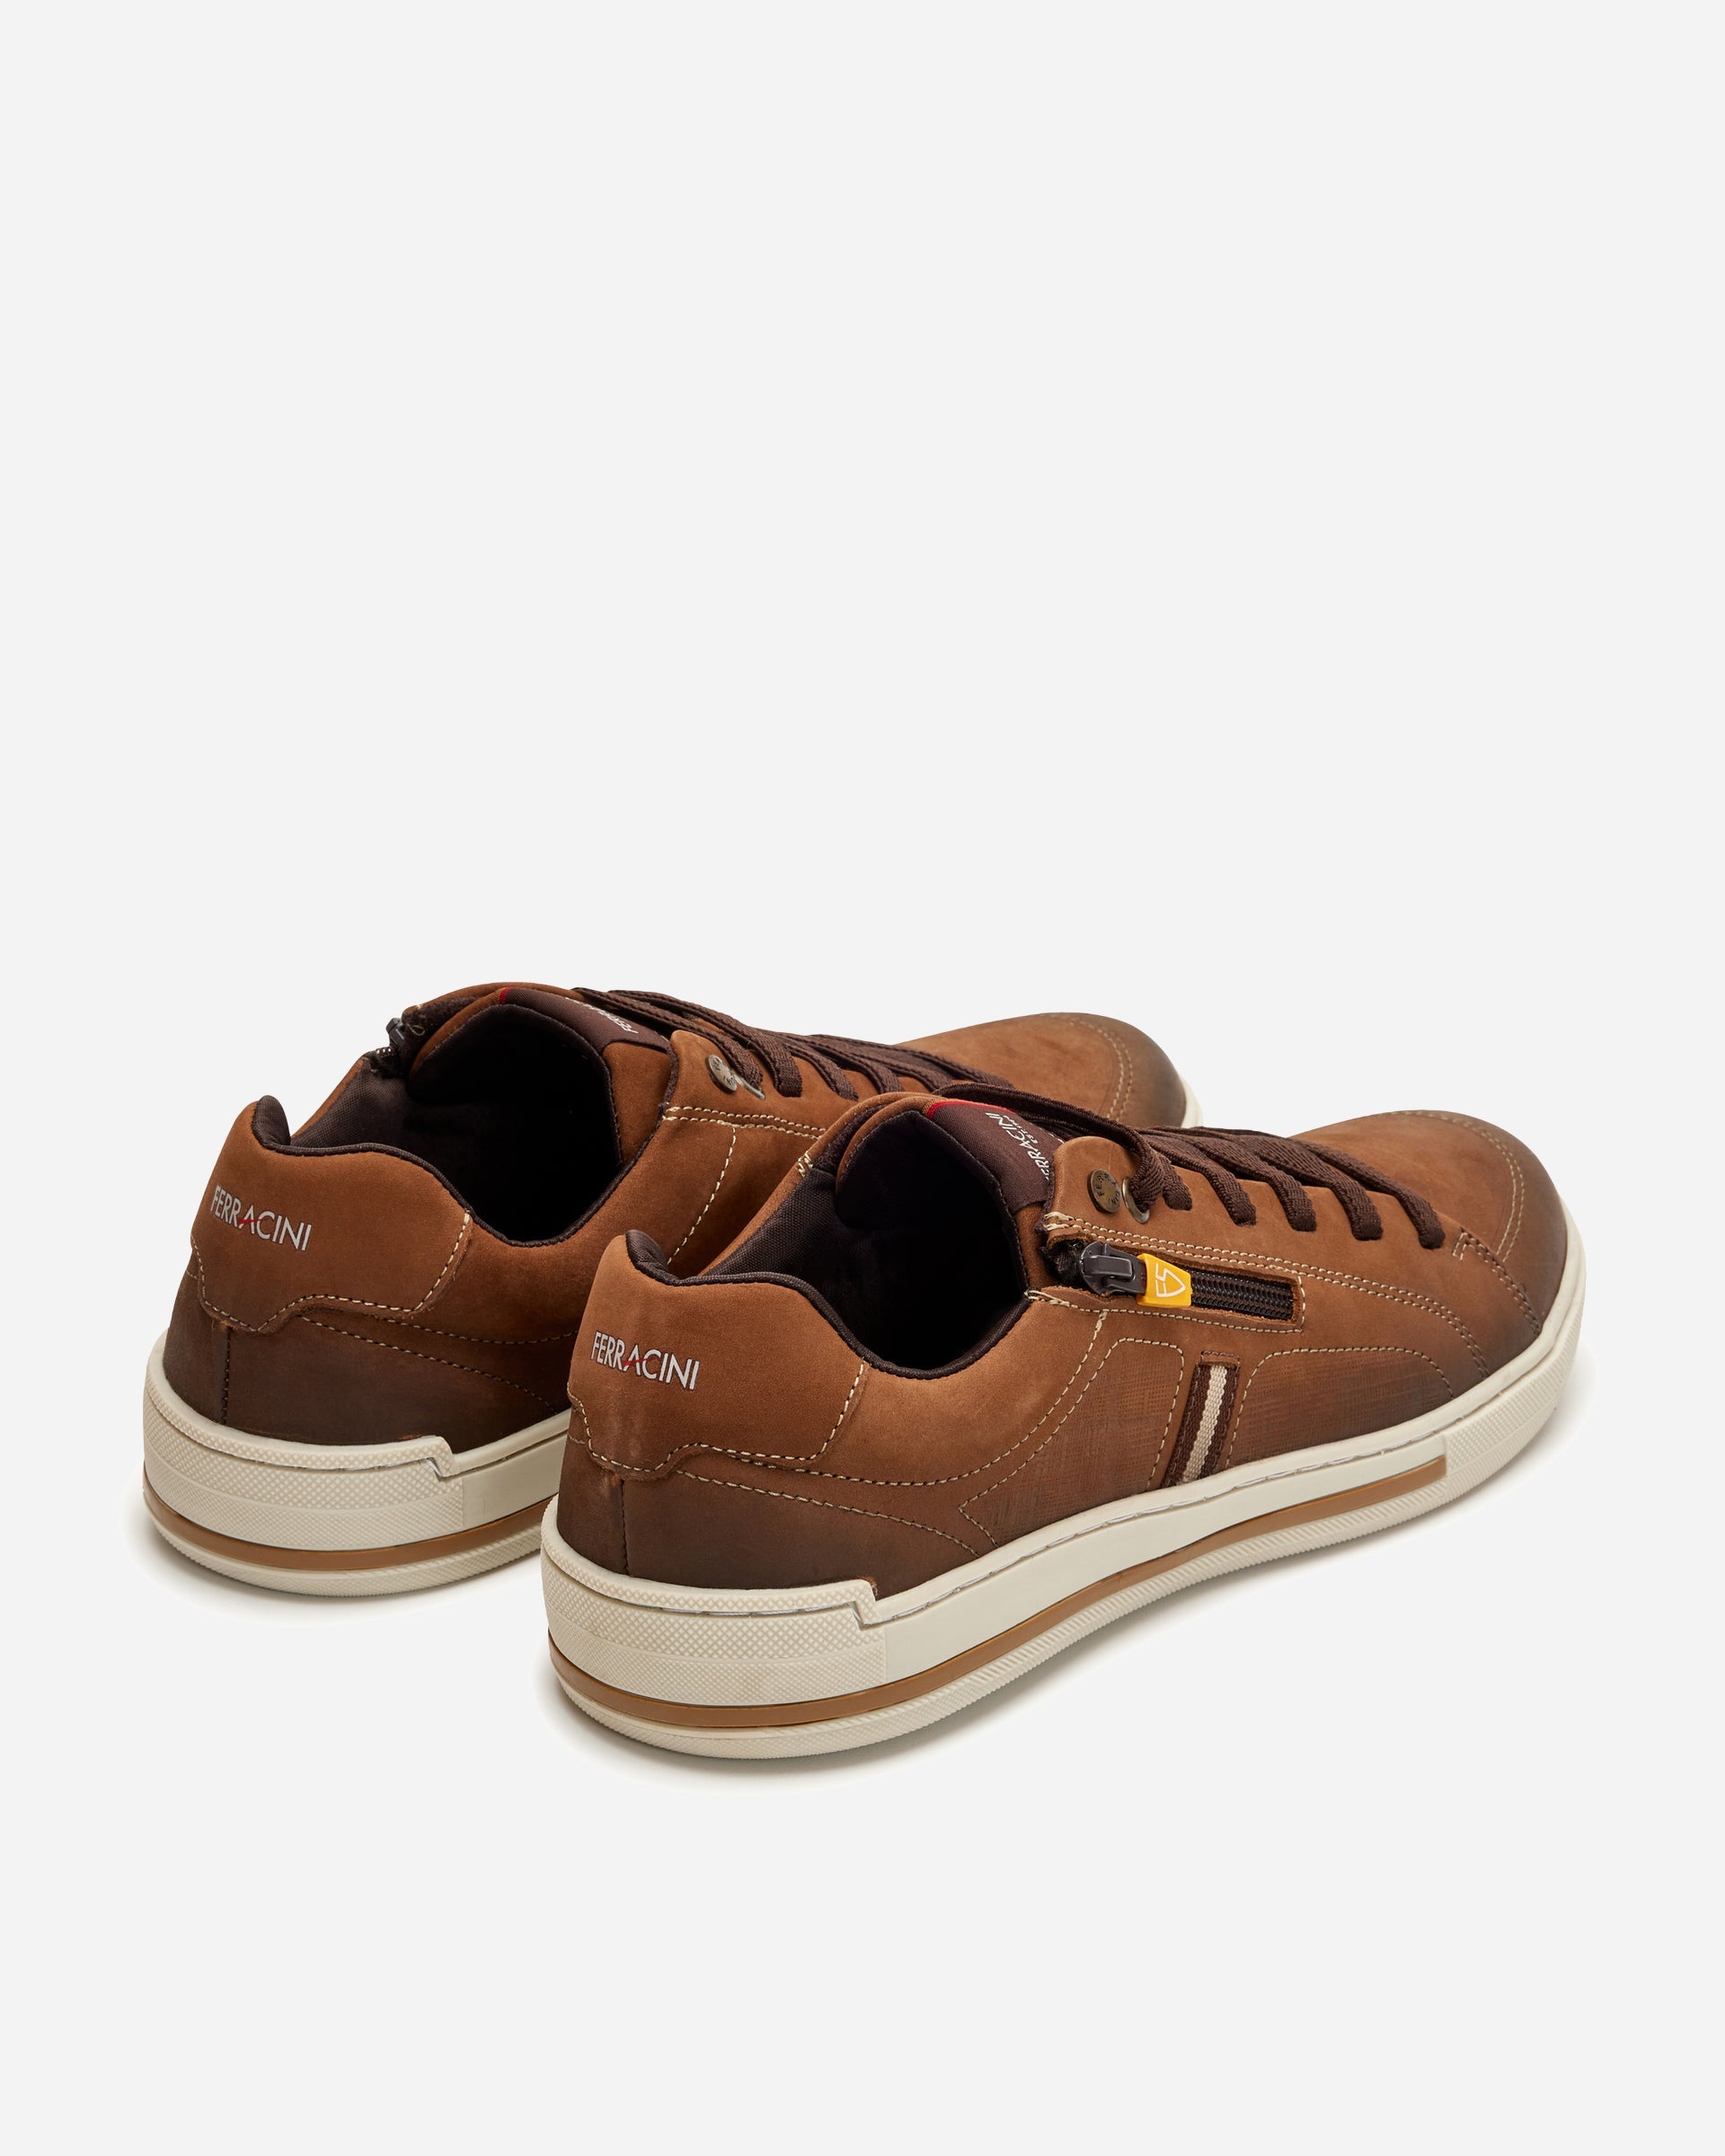 Uziah Brown Sneaker - Men's Shoes at Menzclub